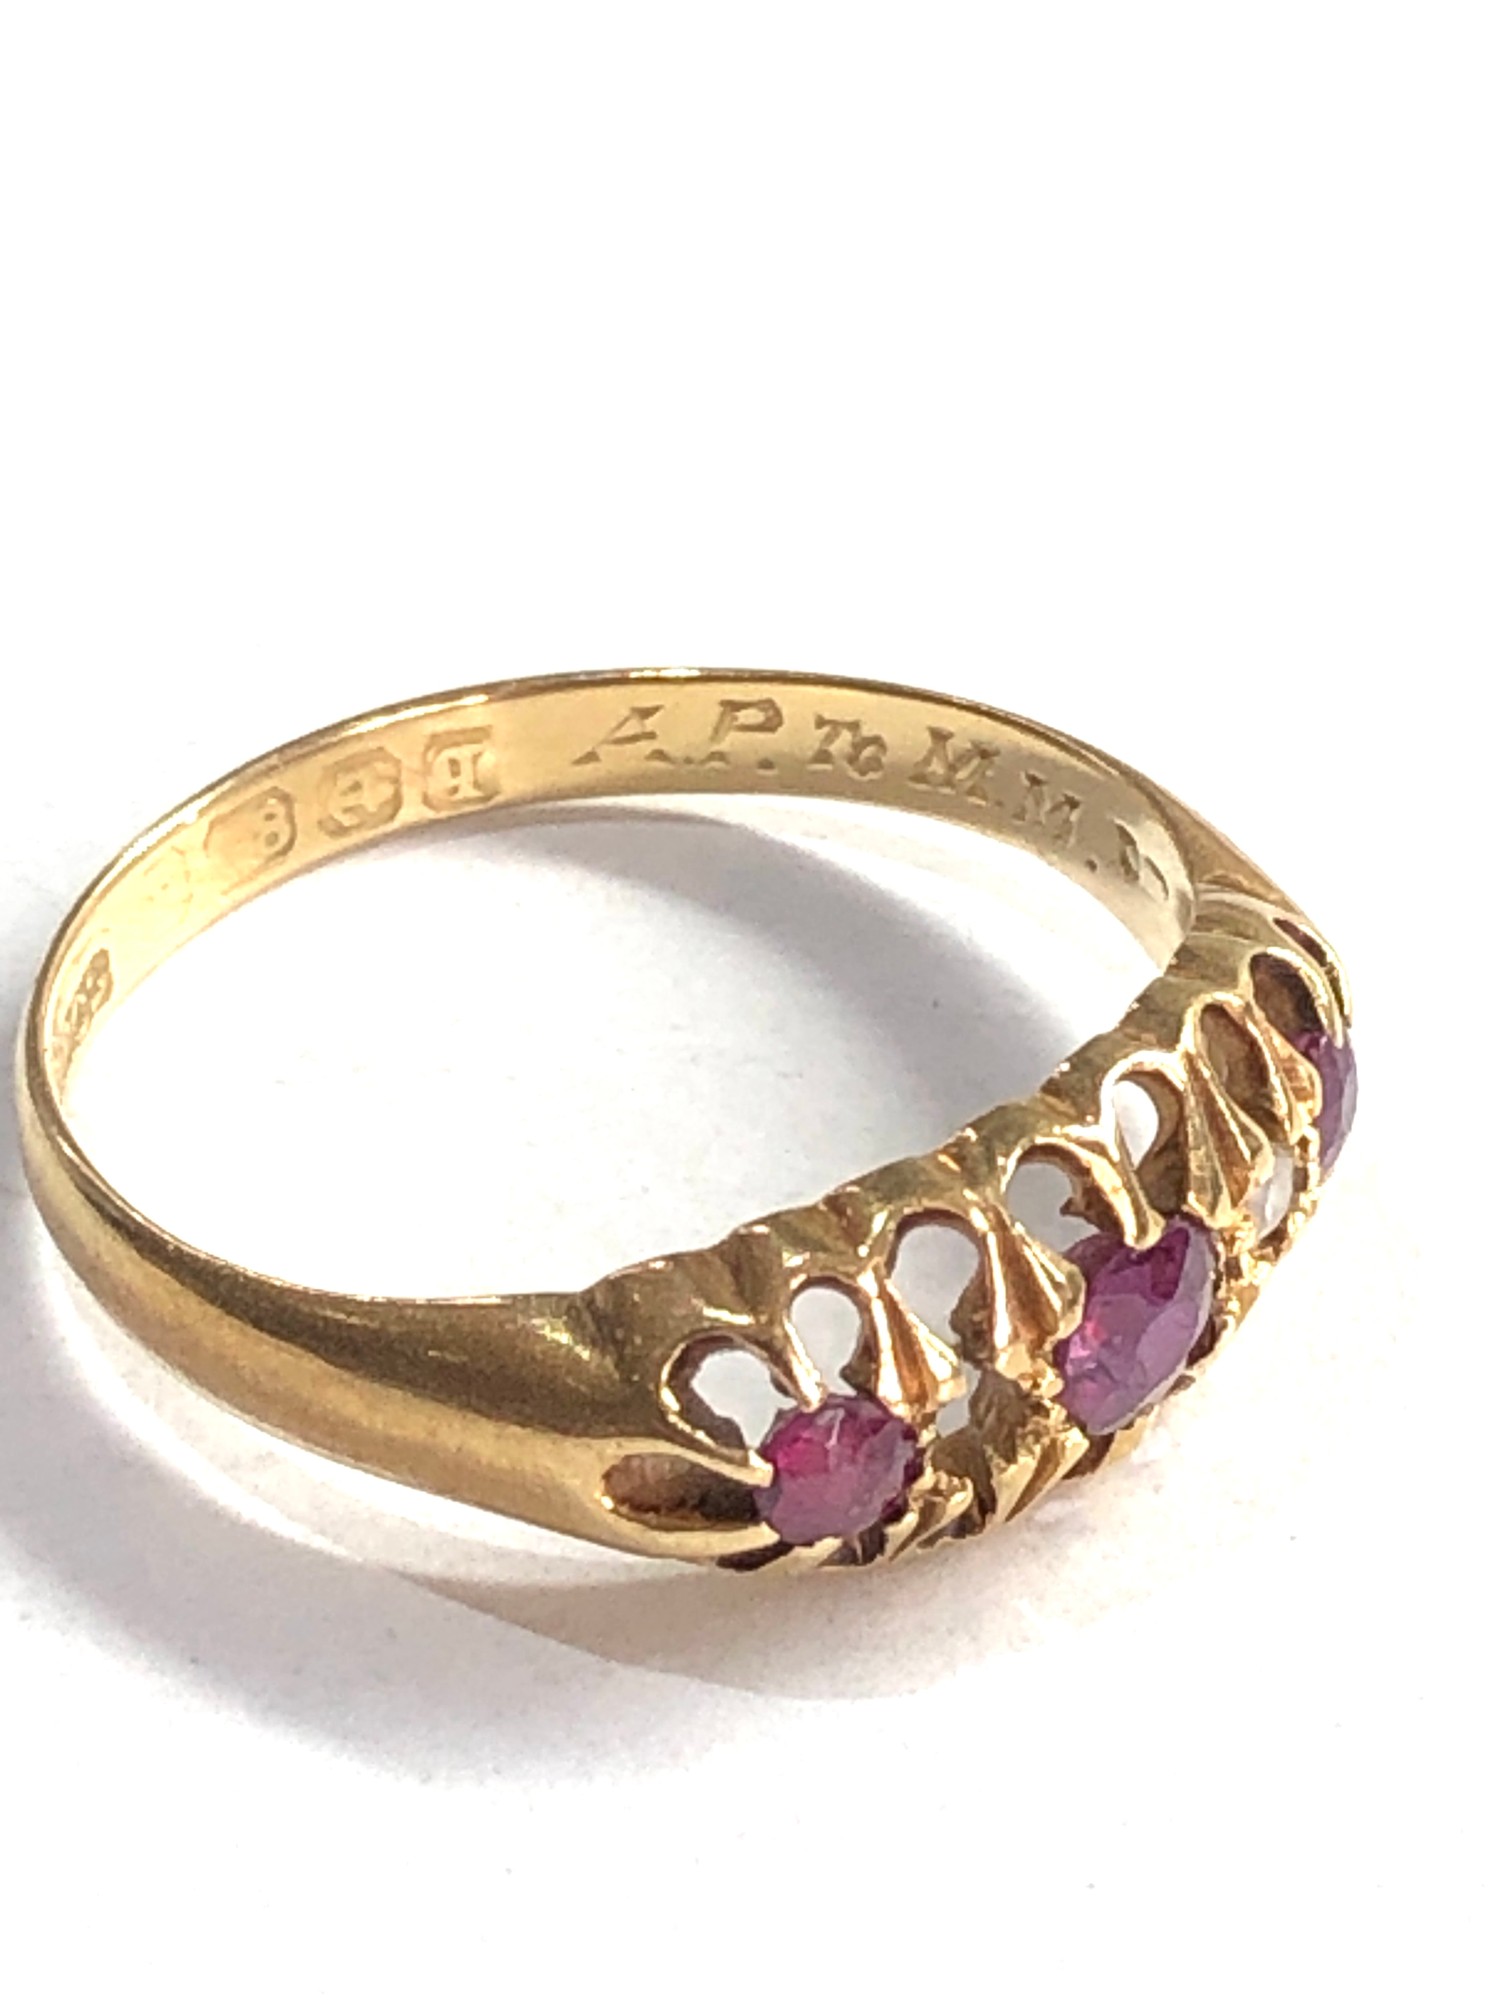 18ct gold diamond & garnet ring, missing stone 2.9g - Image 2 of 3